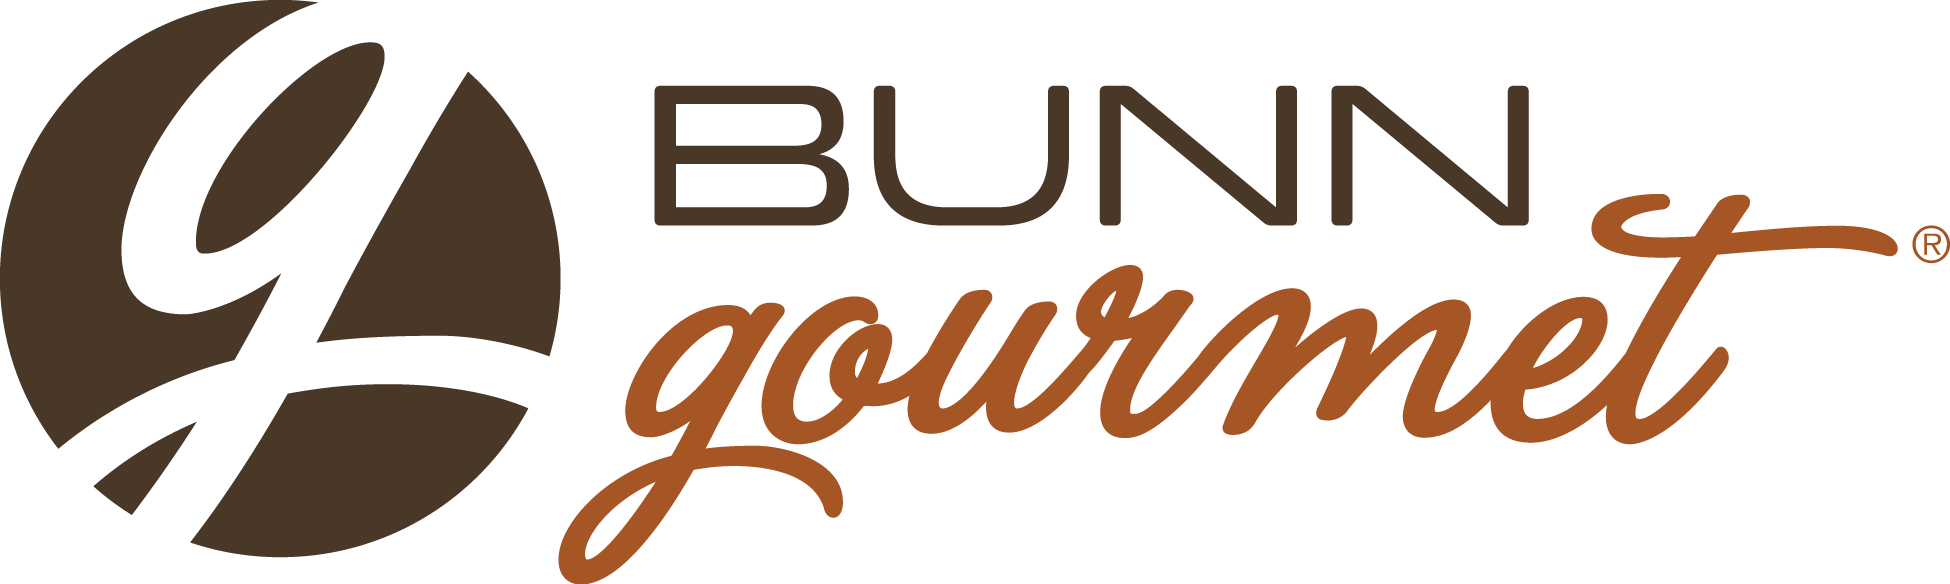 Bunn Logo - BUNN Gourmet